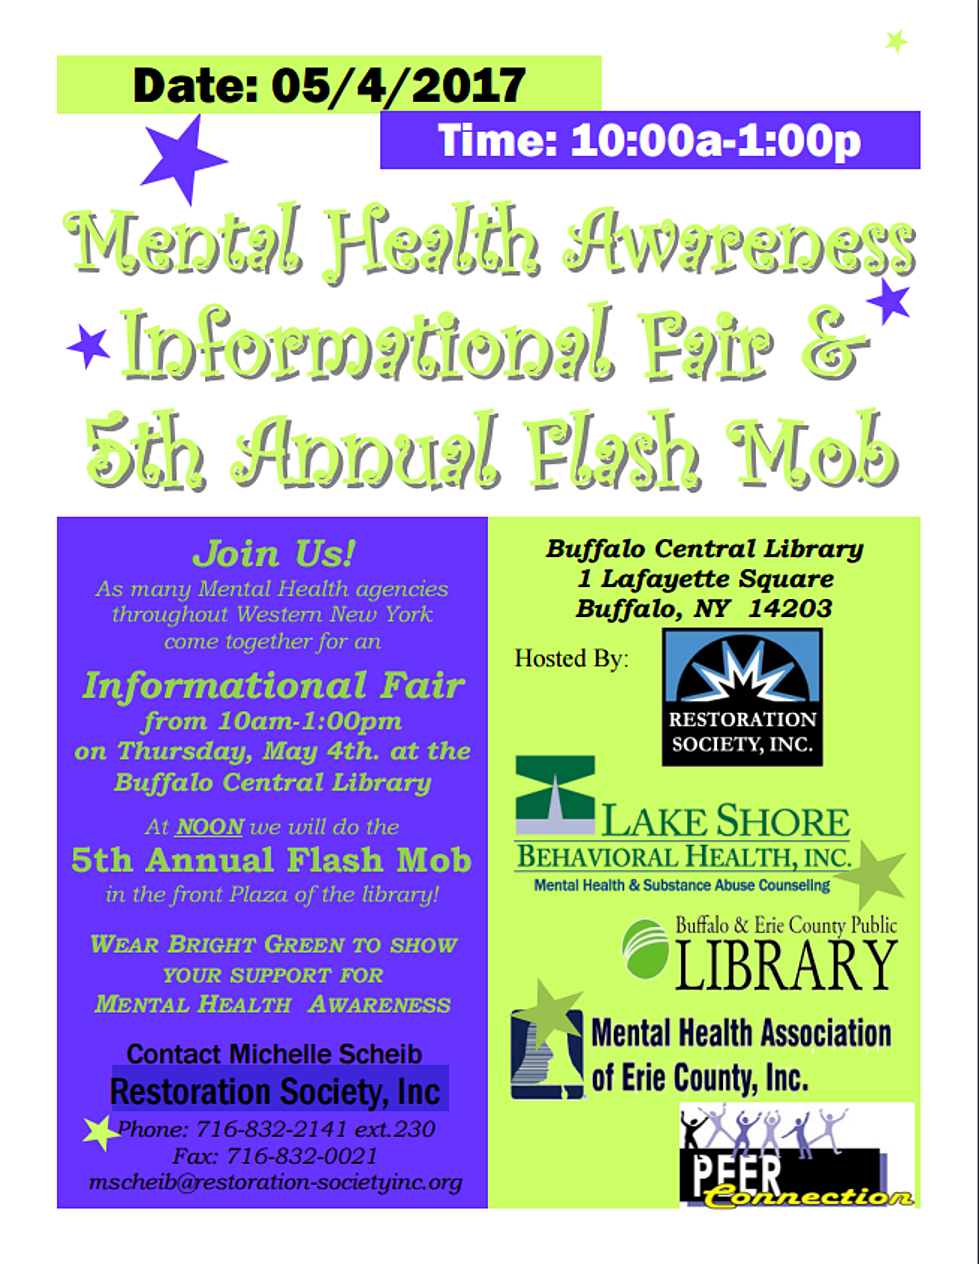 Community: Free Mental Health Fair At Central Library May 4, 2017